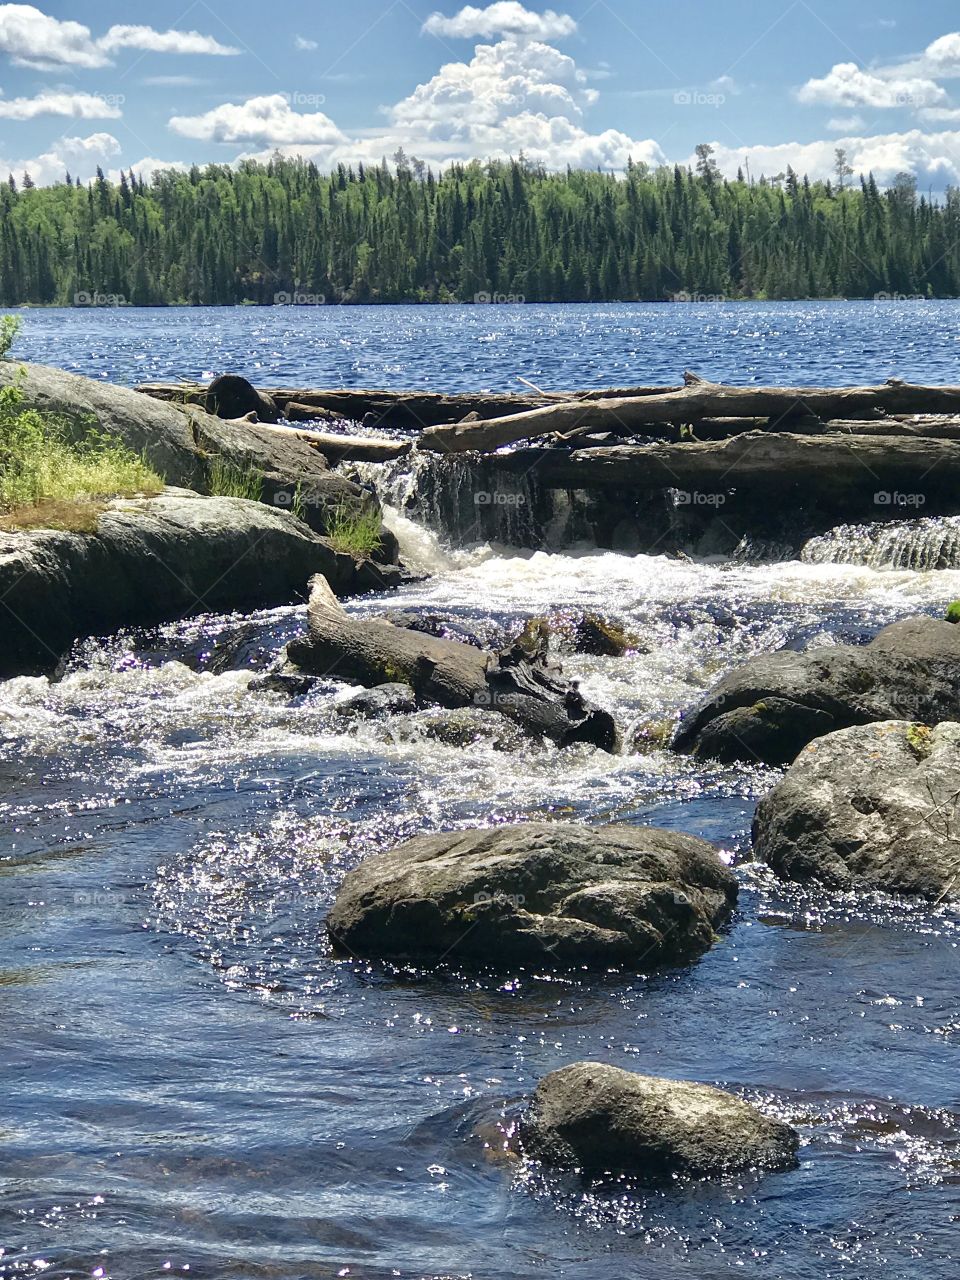 Beautiful Ontario lake scenery (2019 photograph)